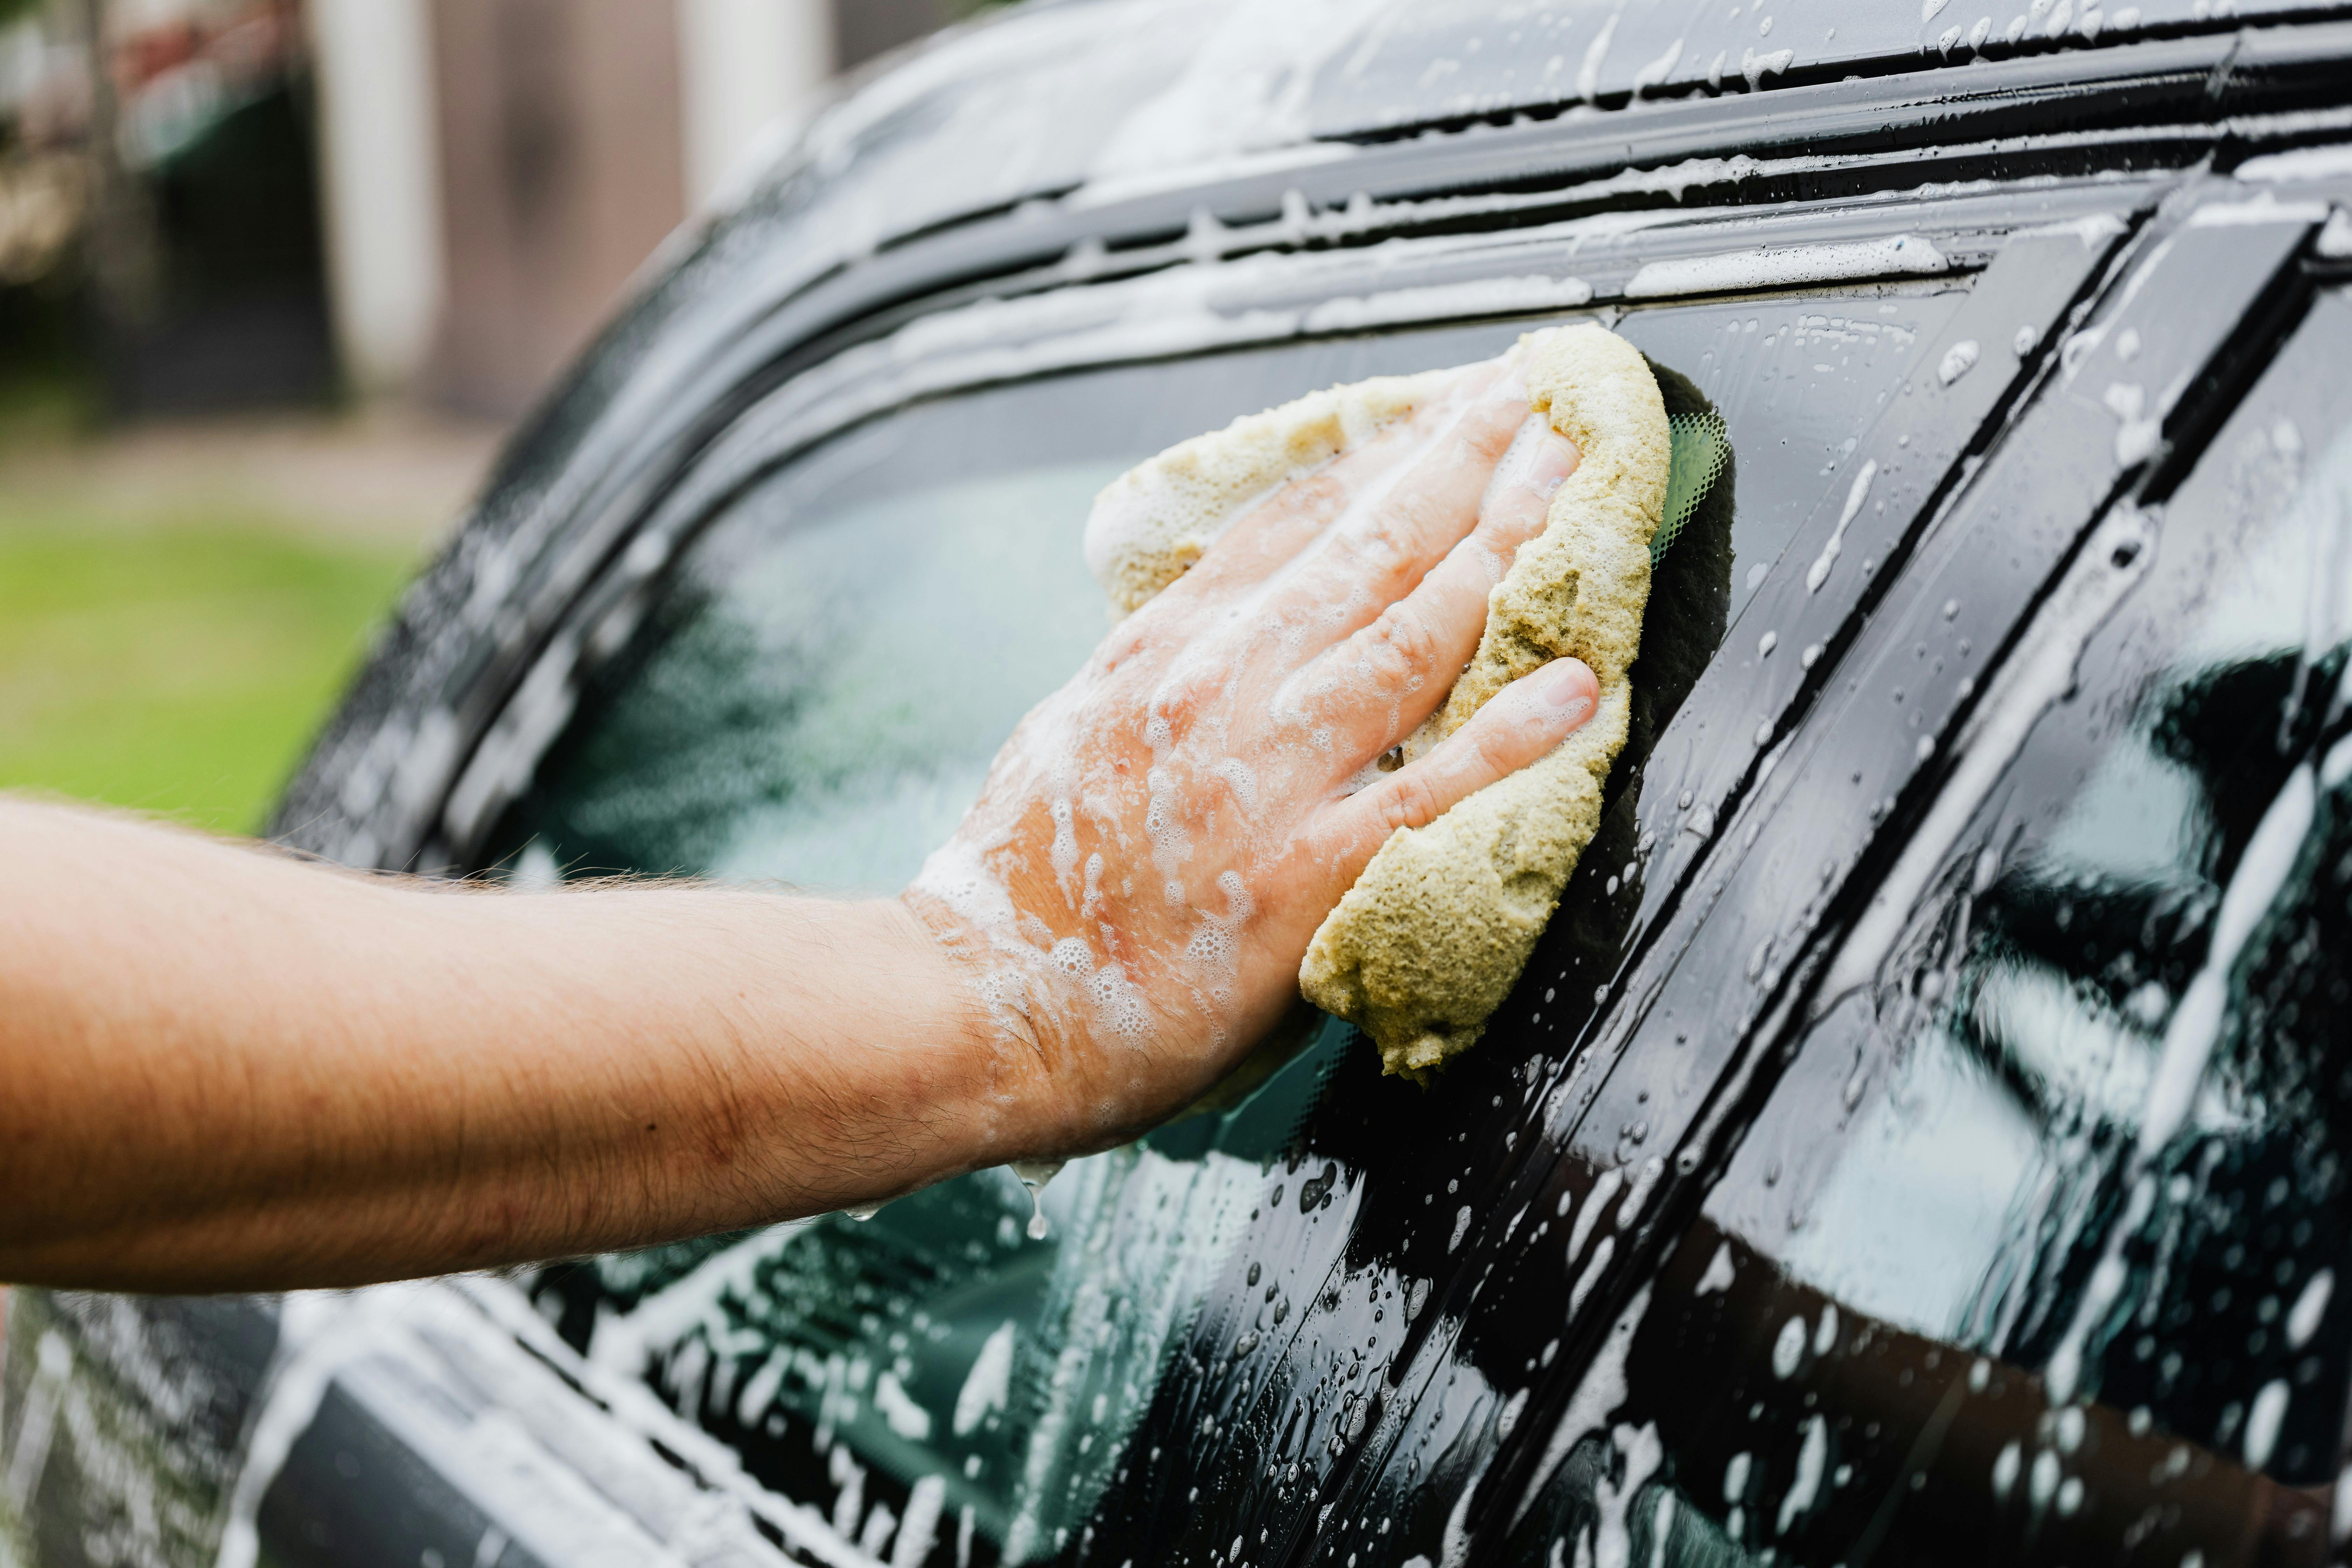 A man washes his car | Source: Pexels